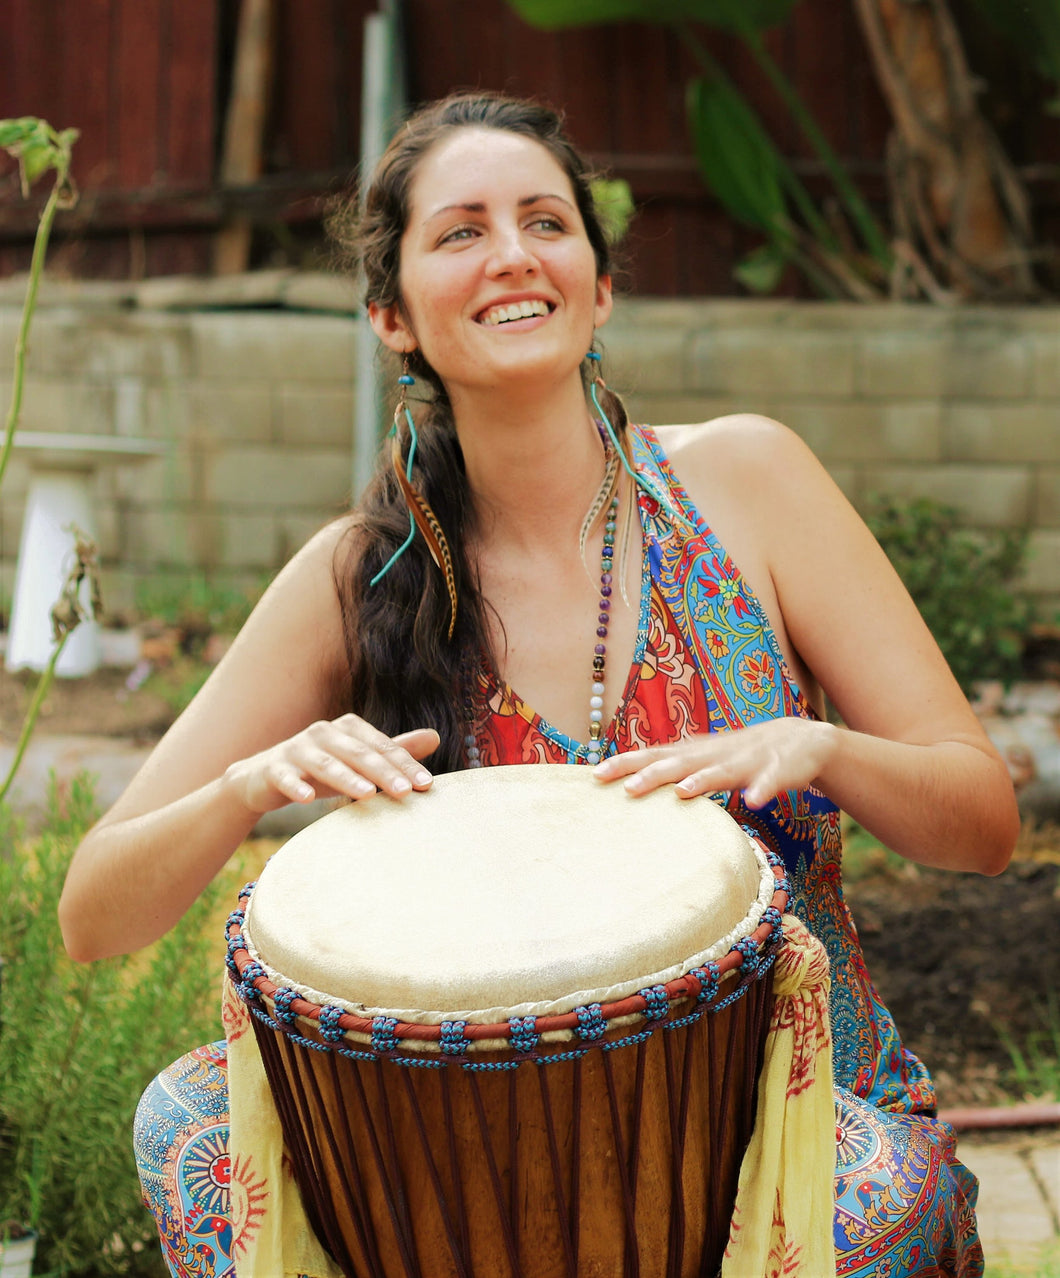 Mystic Rhythms Community Song, Drumming & Sound Journey